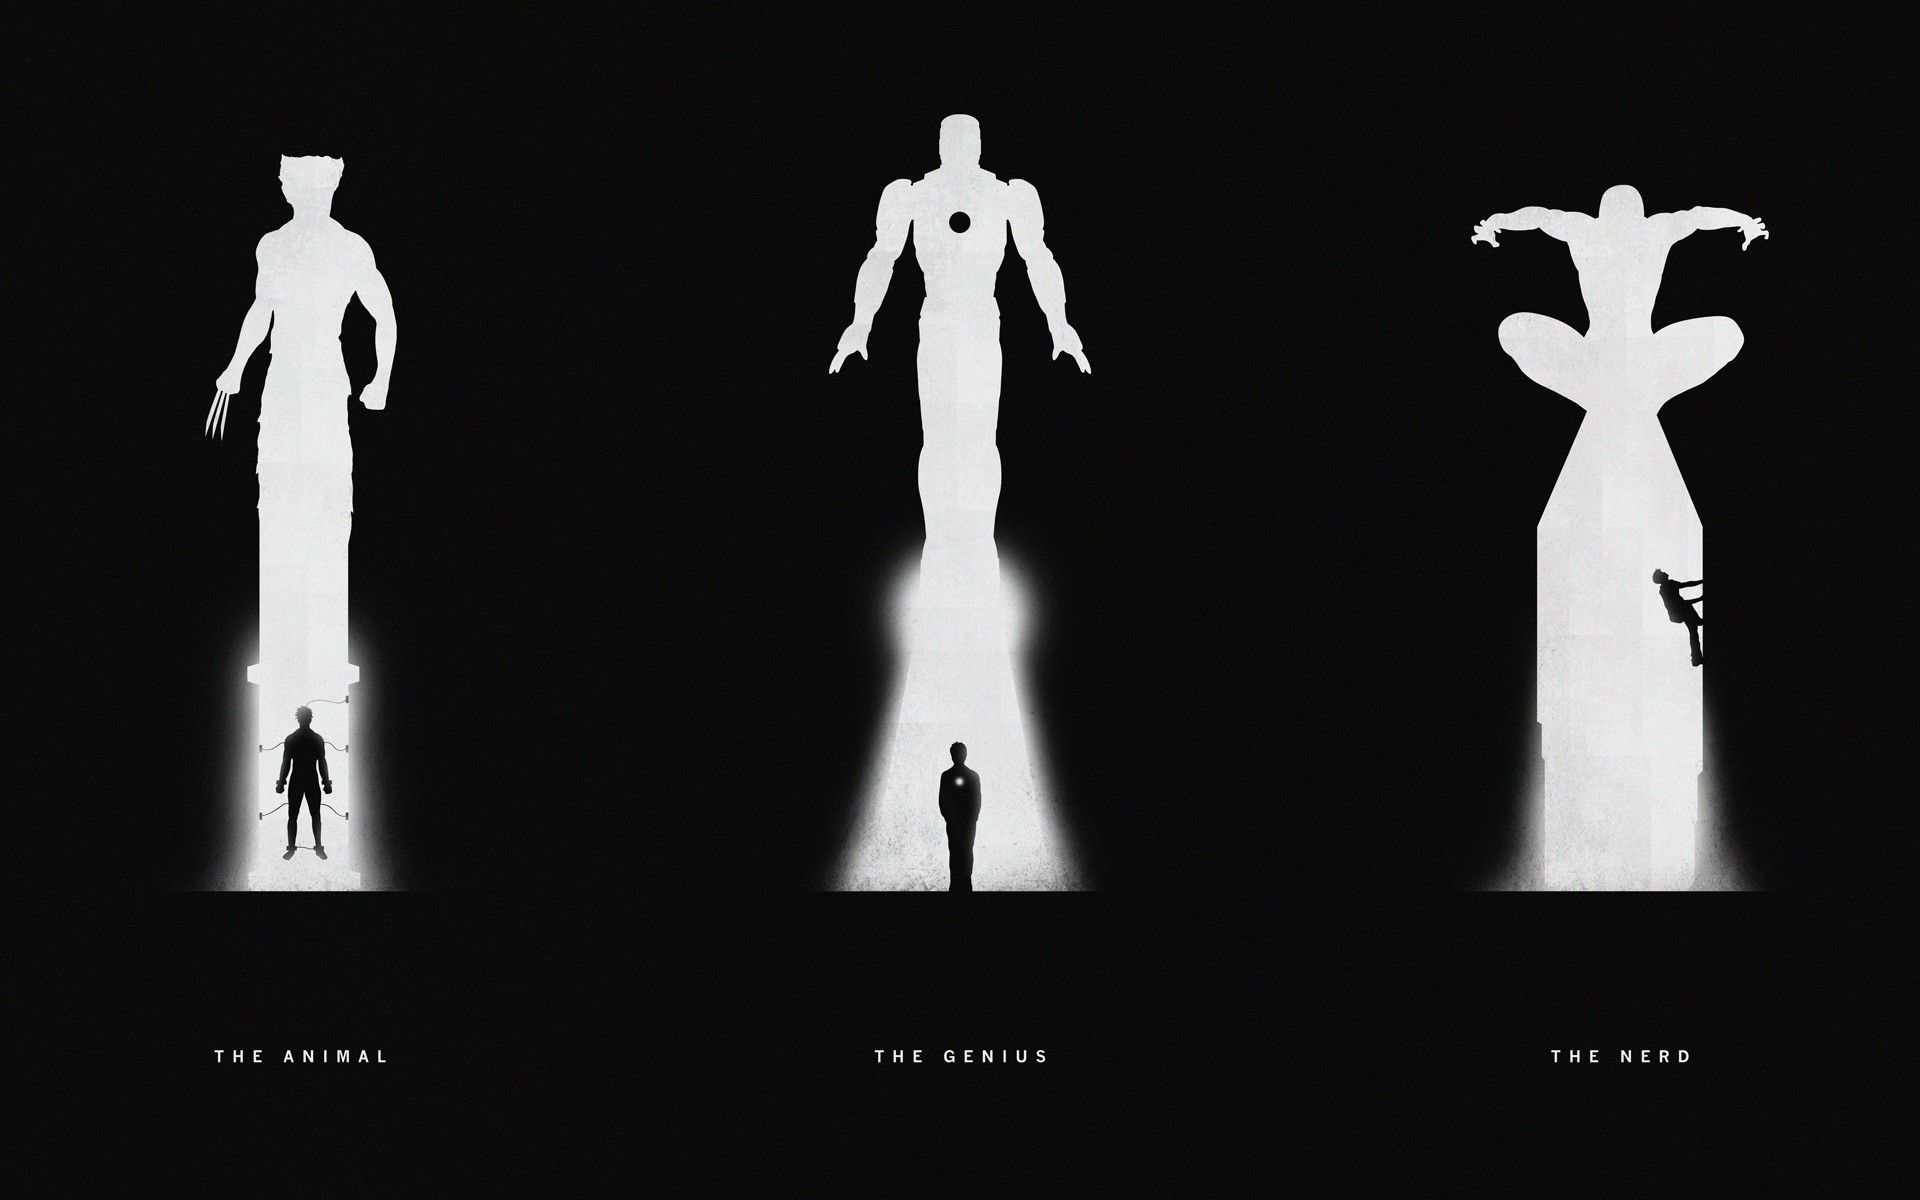 Superhero silhouettes Wallpaper. Avengers wallpaper, Superhero silhouette, Marvel posters